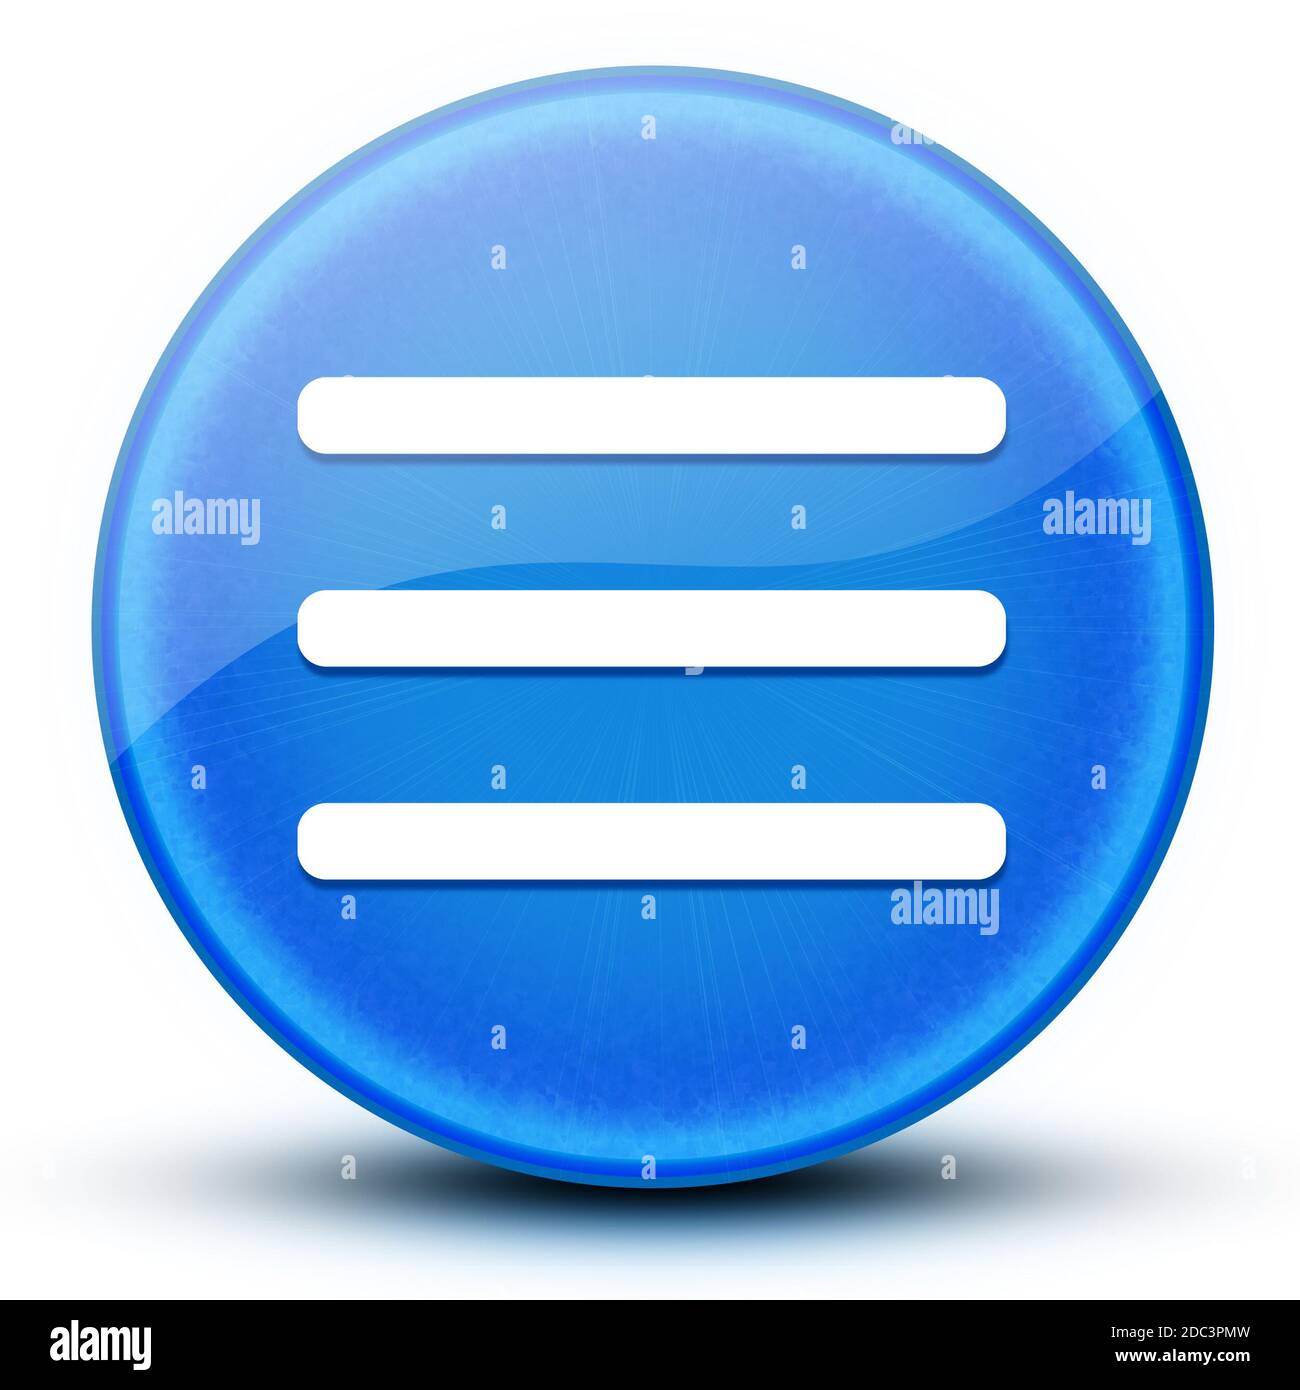 Hamburger menu bar eyeball glossy blue round button abstract illustration Stock Photo